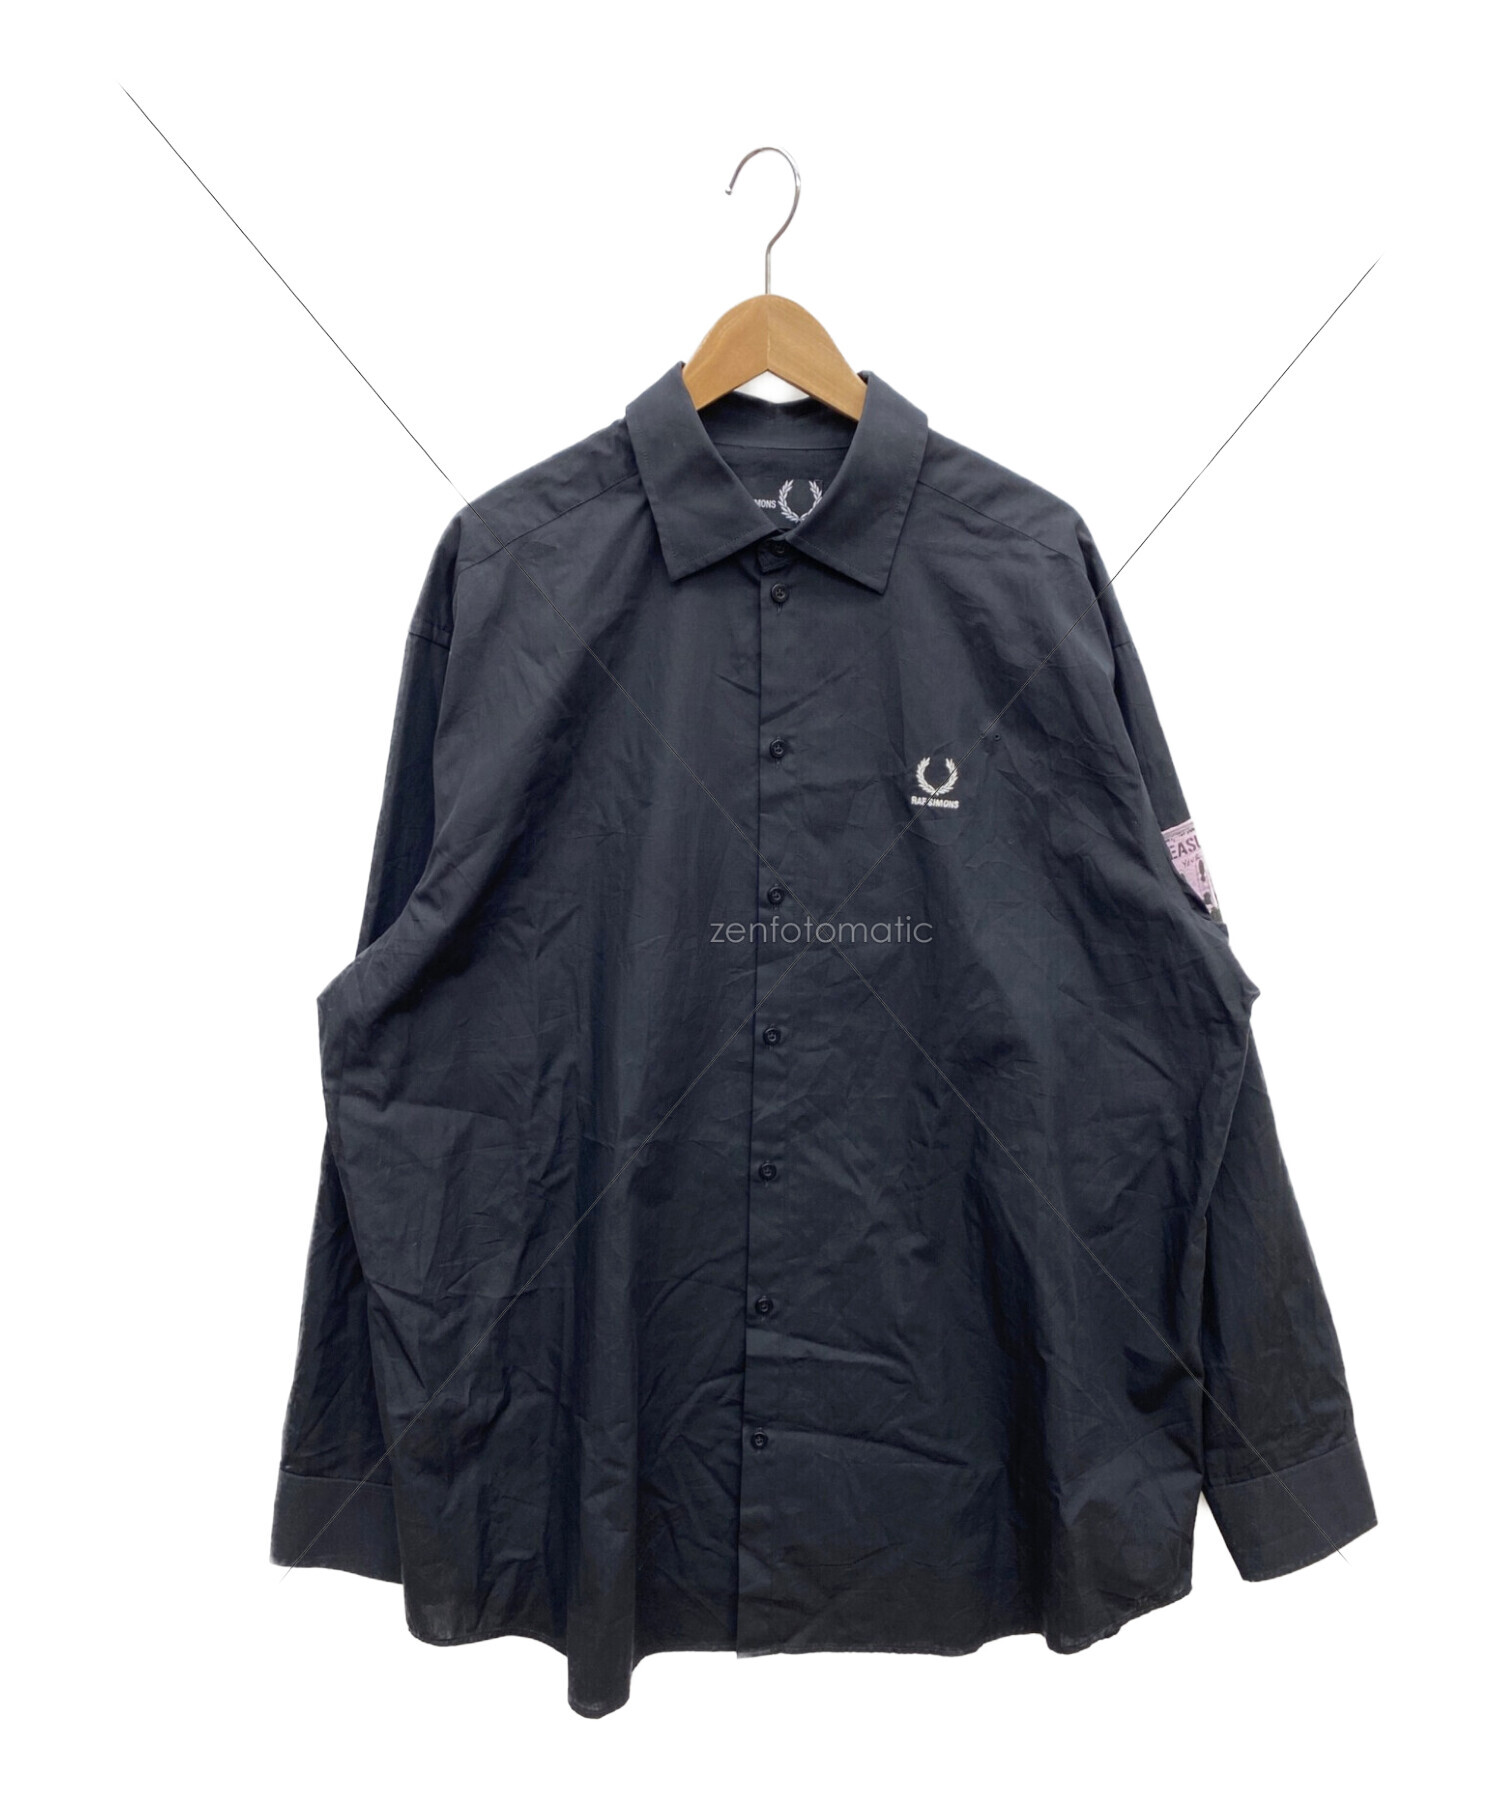 FRED PERRY (フレッドペリー) RAF SIMONS (ラフシモンズ) バックパッチオーバーサイズシャツ ブラック サイズ:M